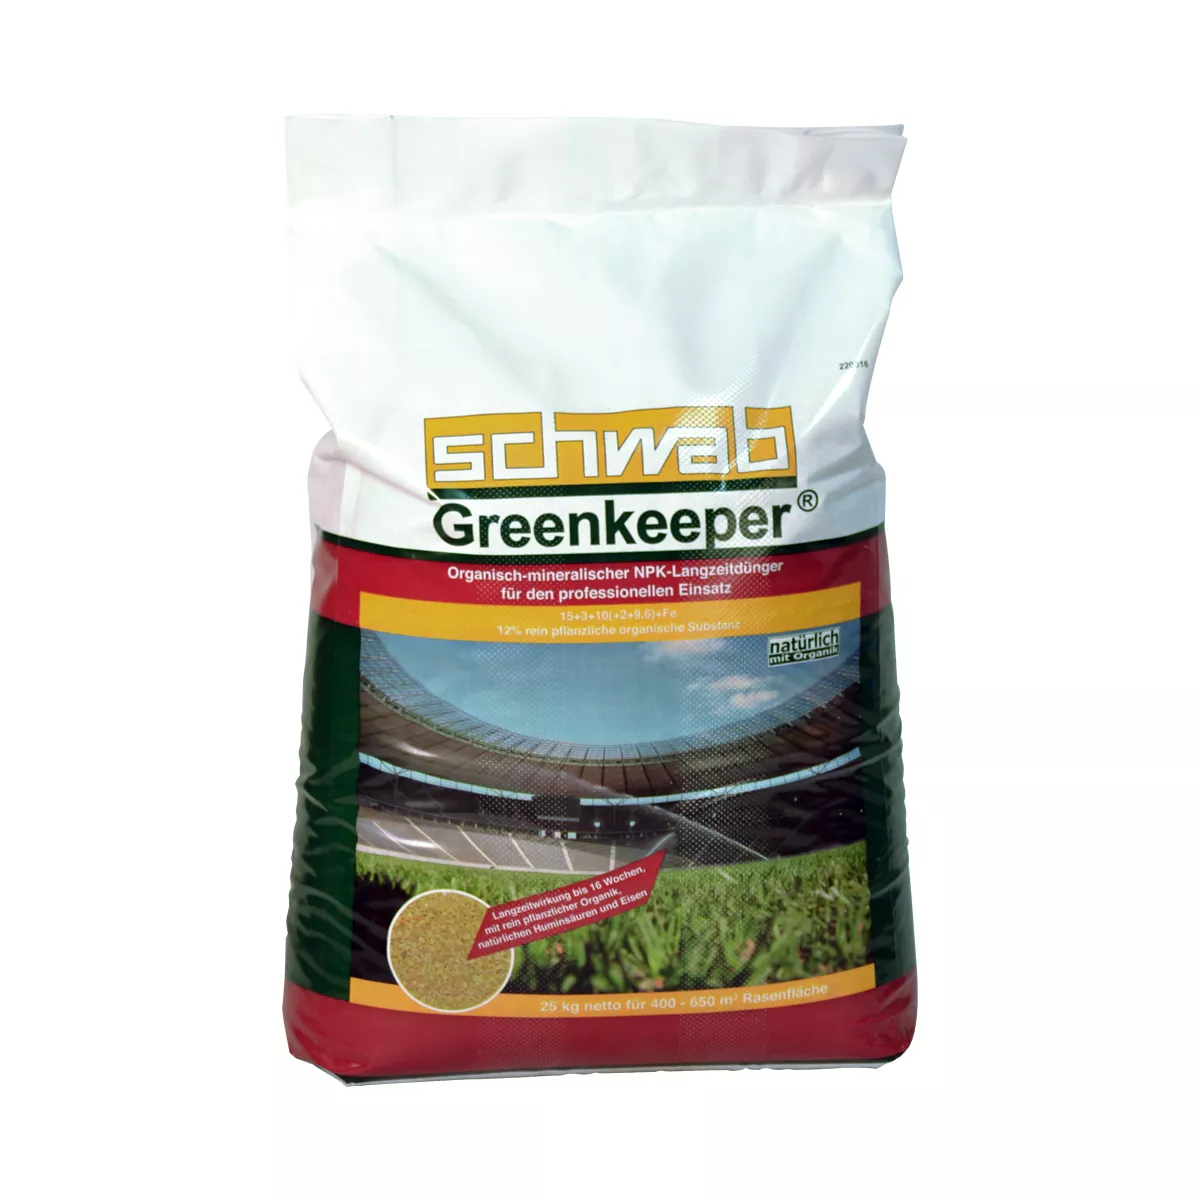 Greenkeeper (25 kg)